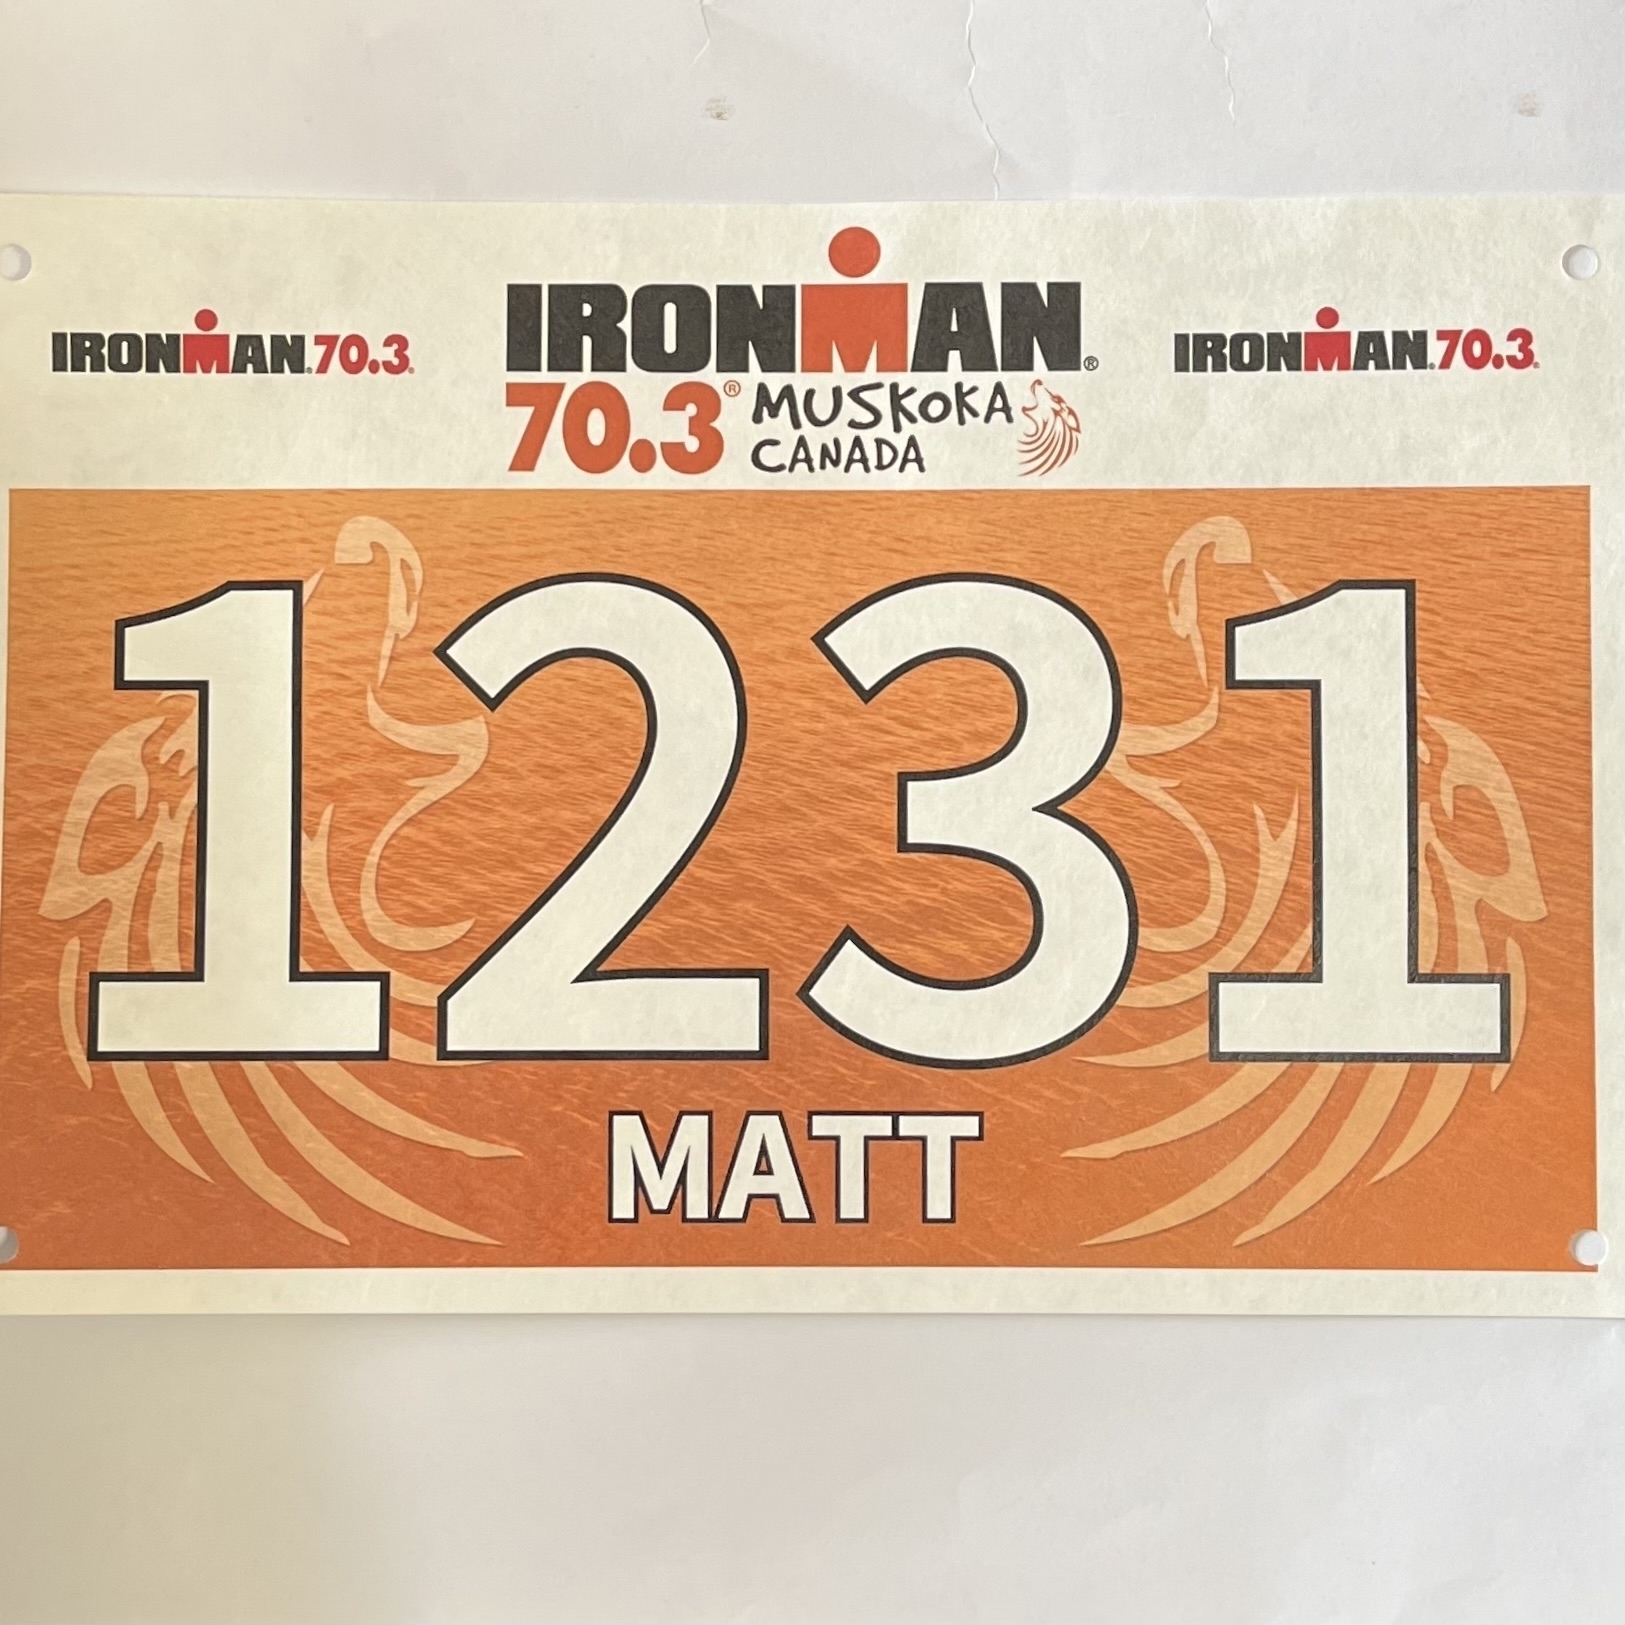 Ironman 70.3 Muskoka bib